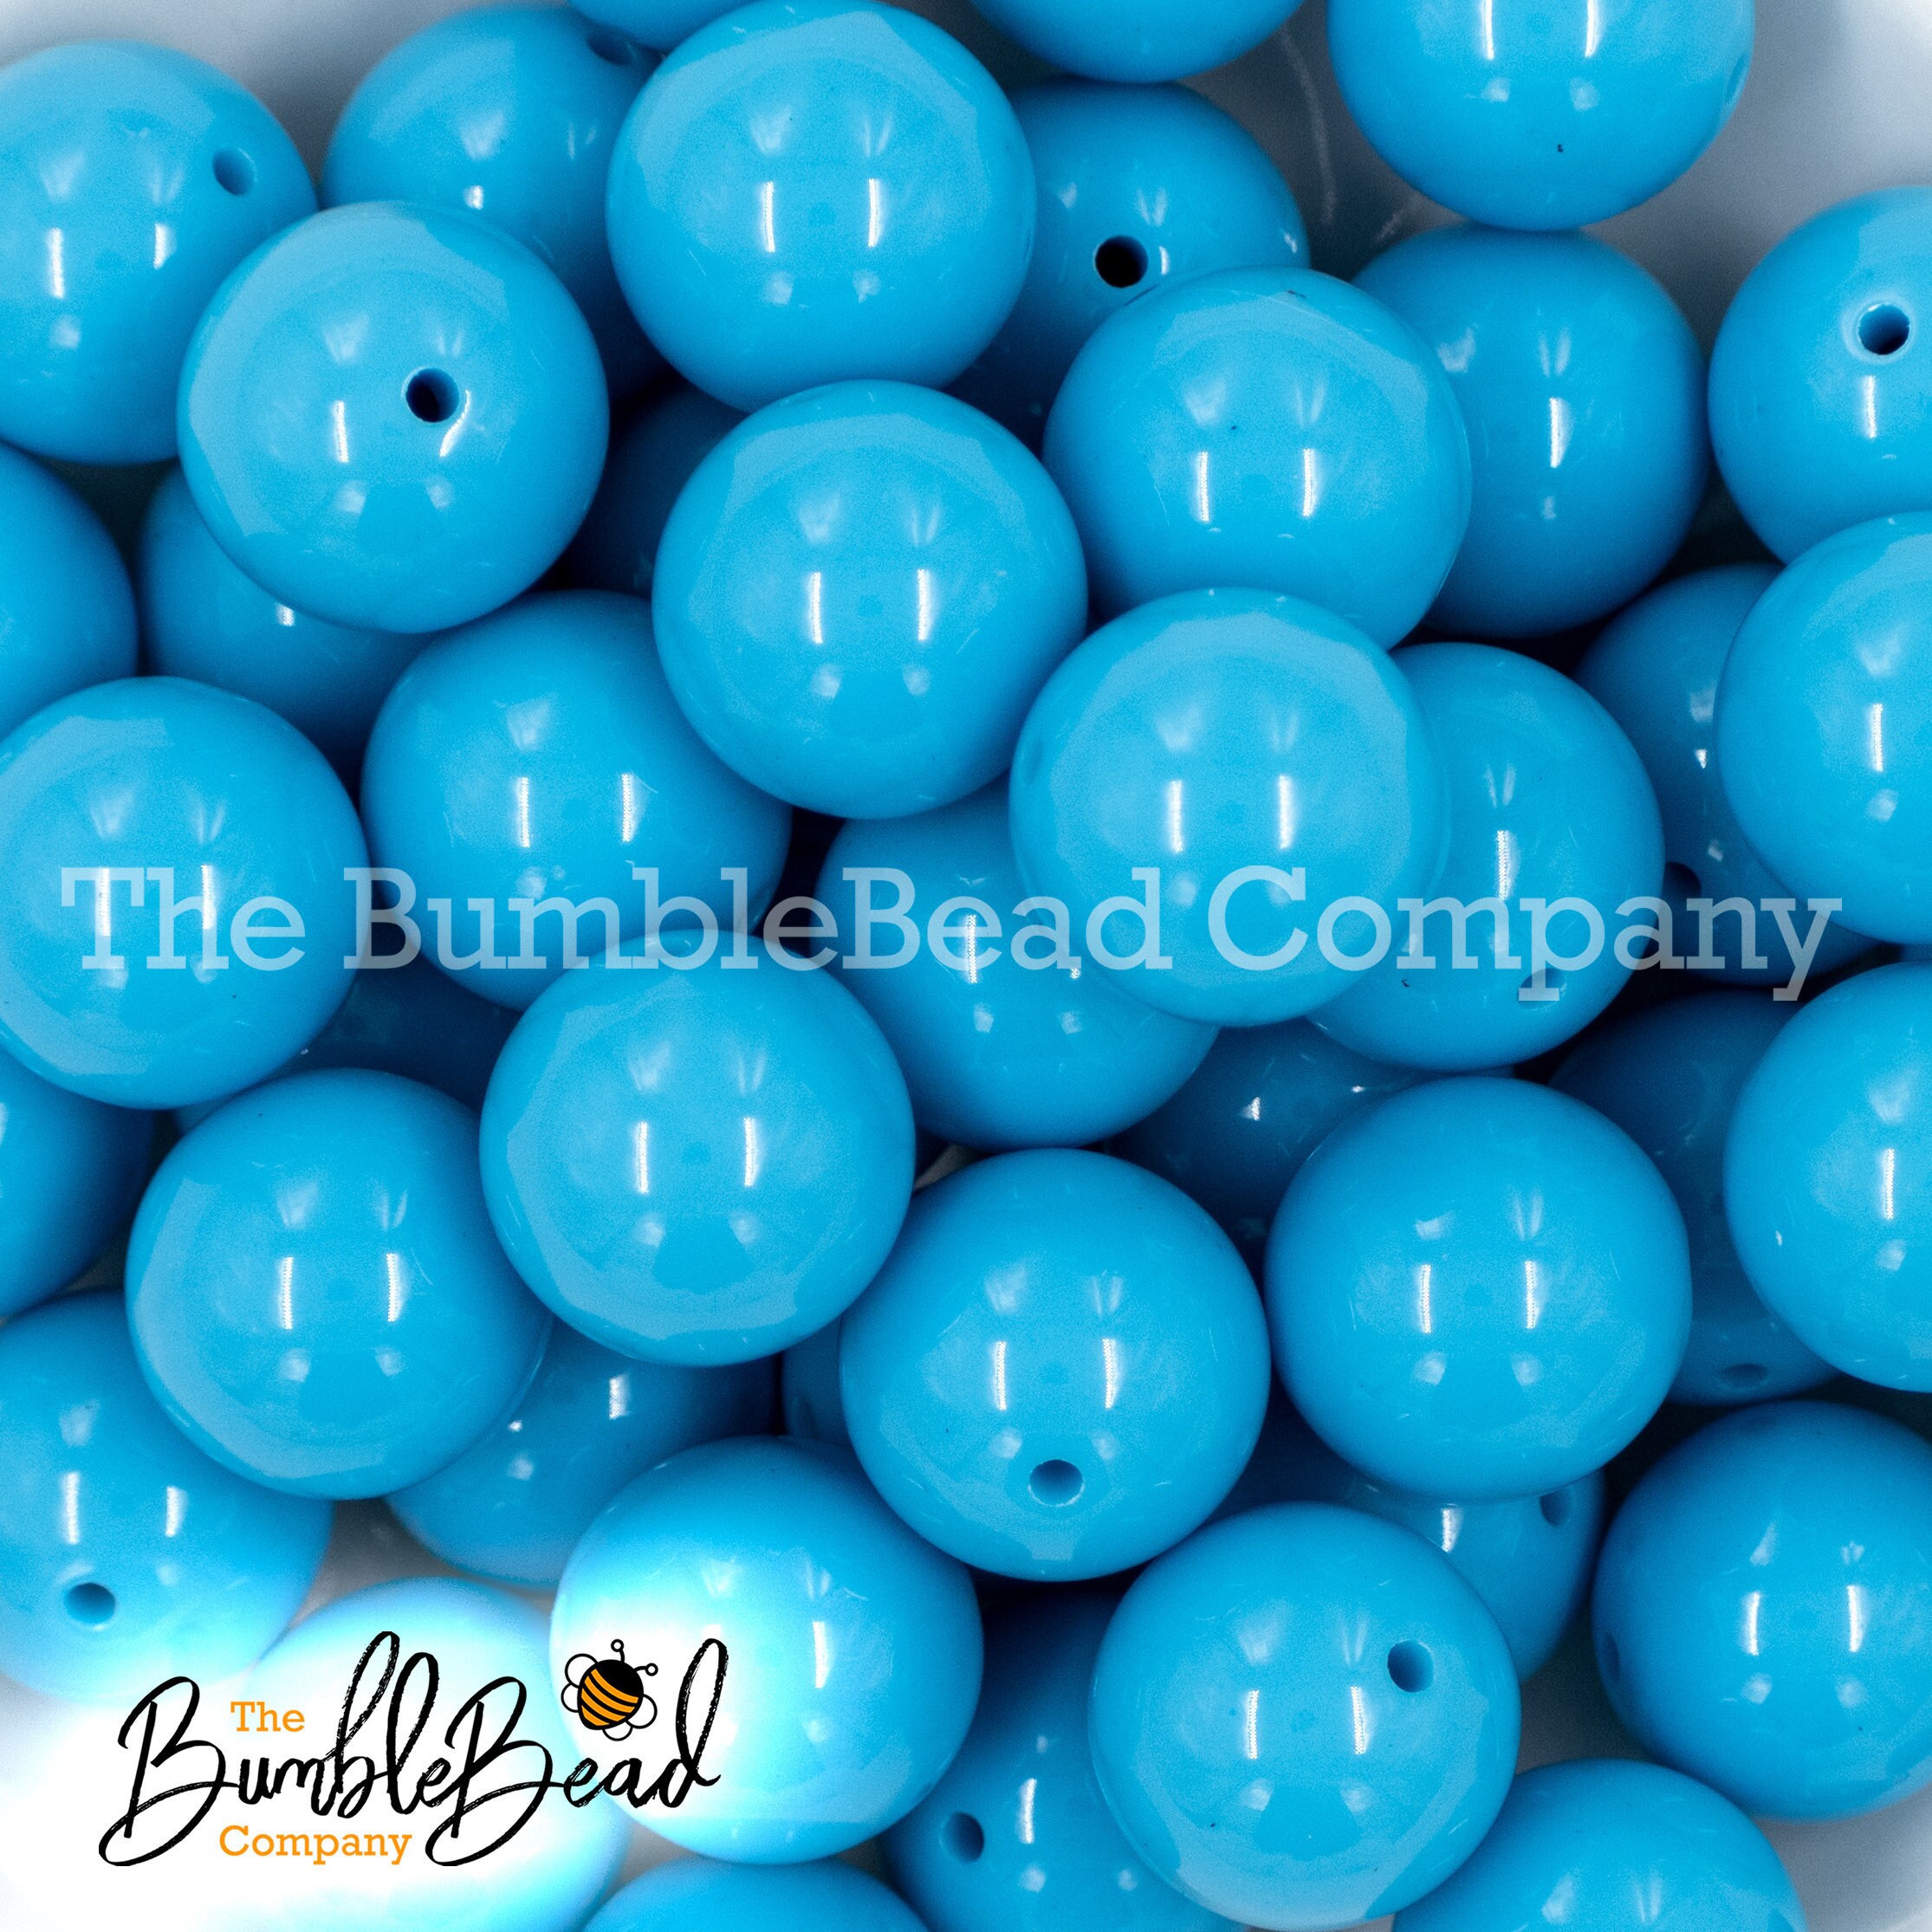 20mm Royal Blue Rhinestone Beads, Chunky Rhinestone Blue Beads, Chunky –  Beadstobows